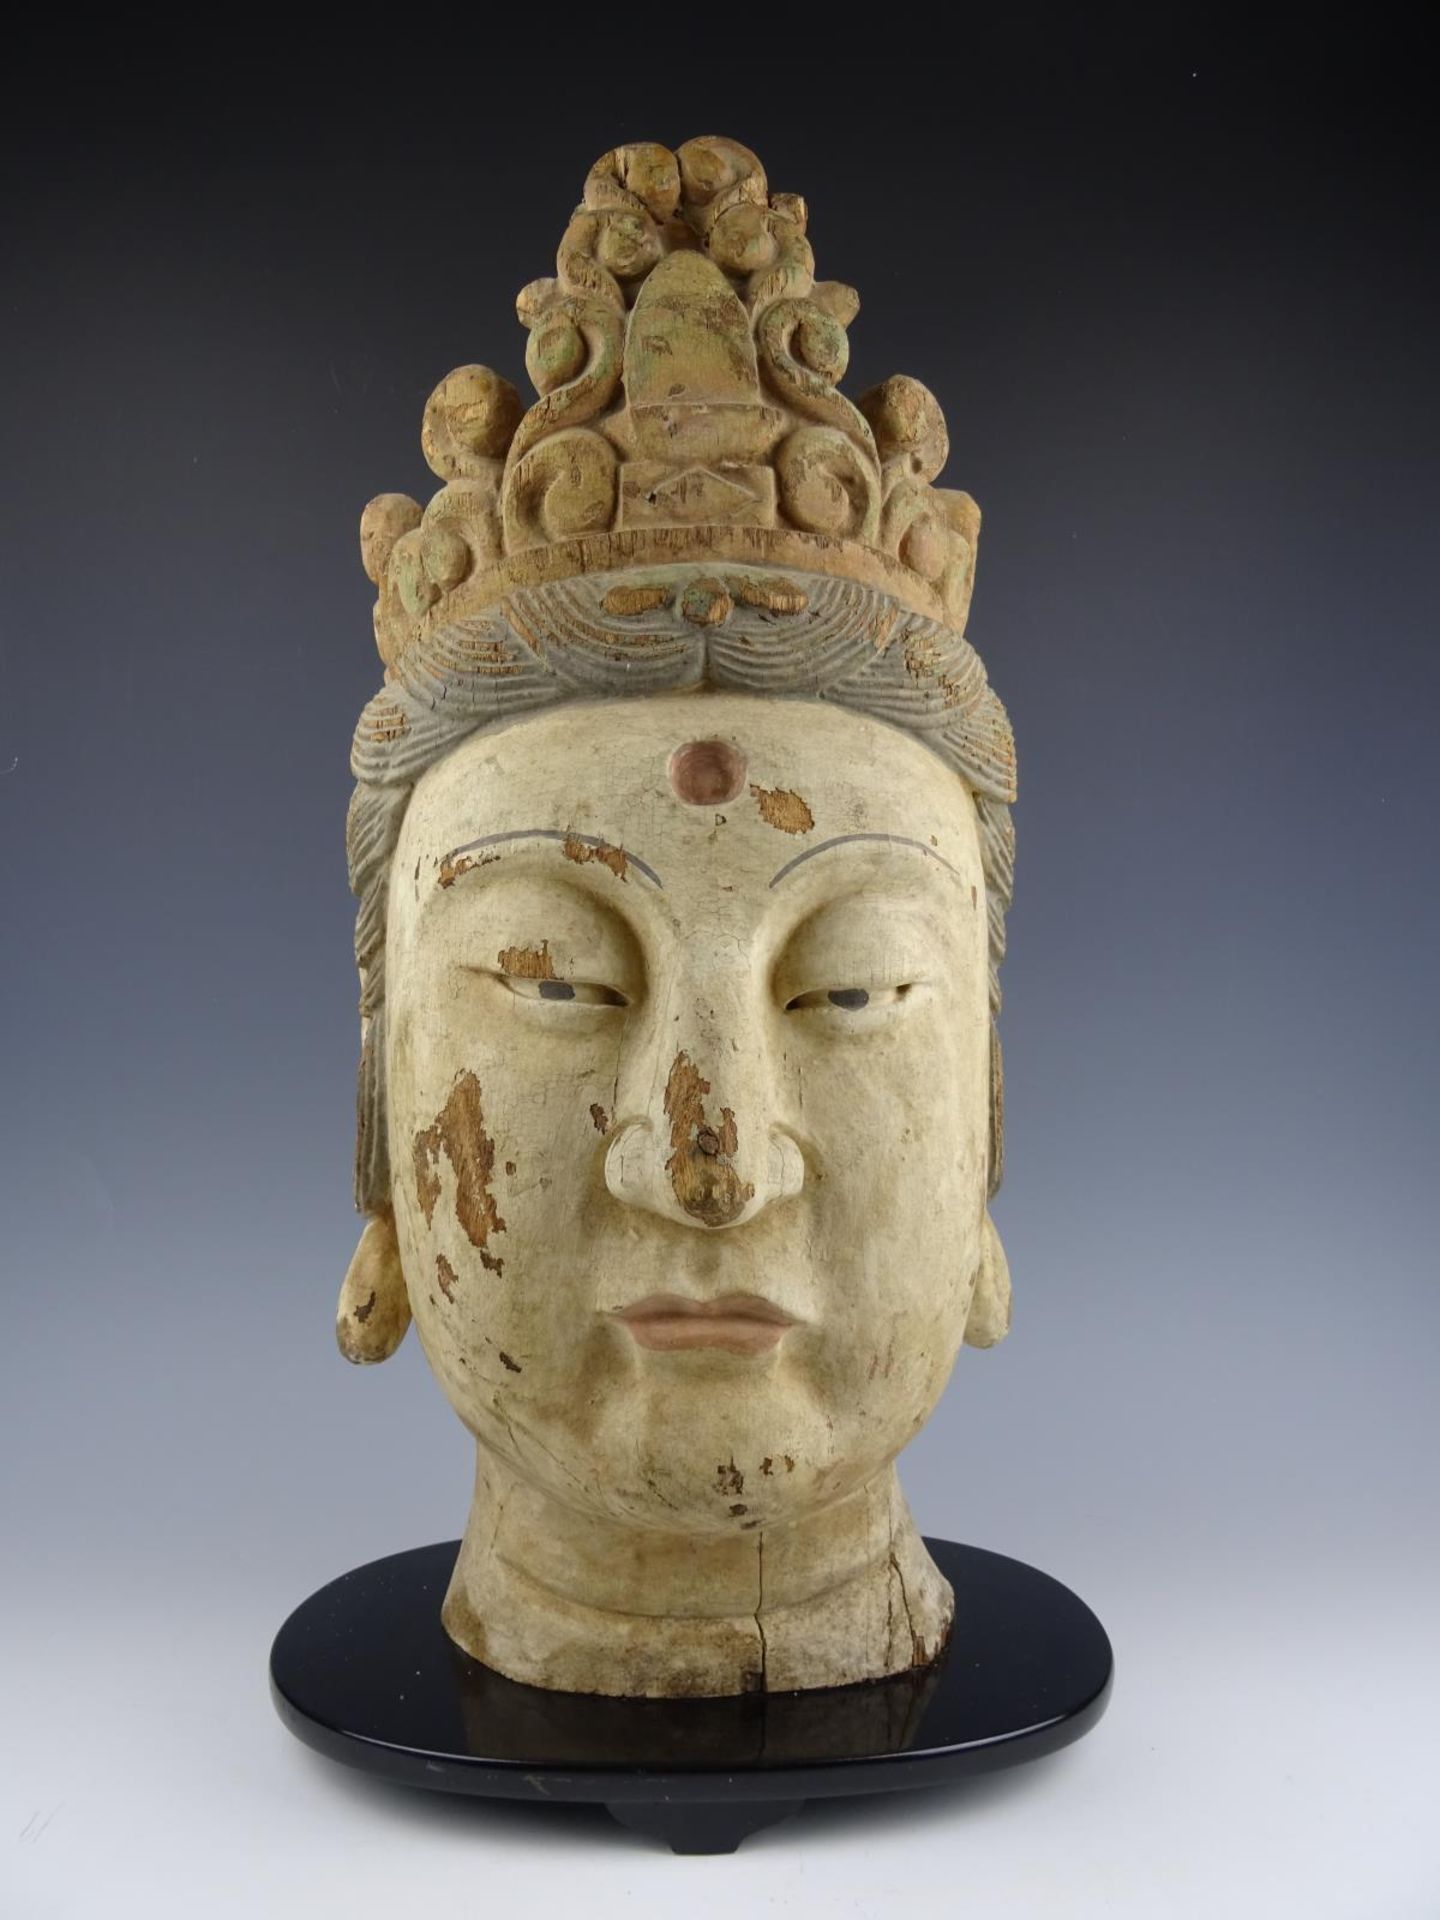 Wood sculpture buddha head